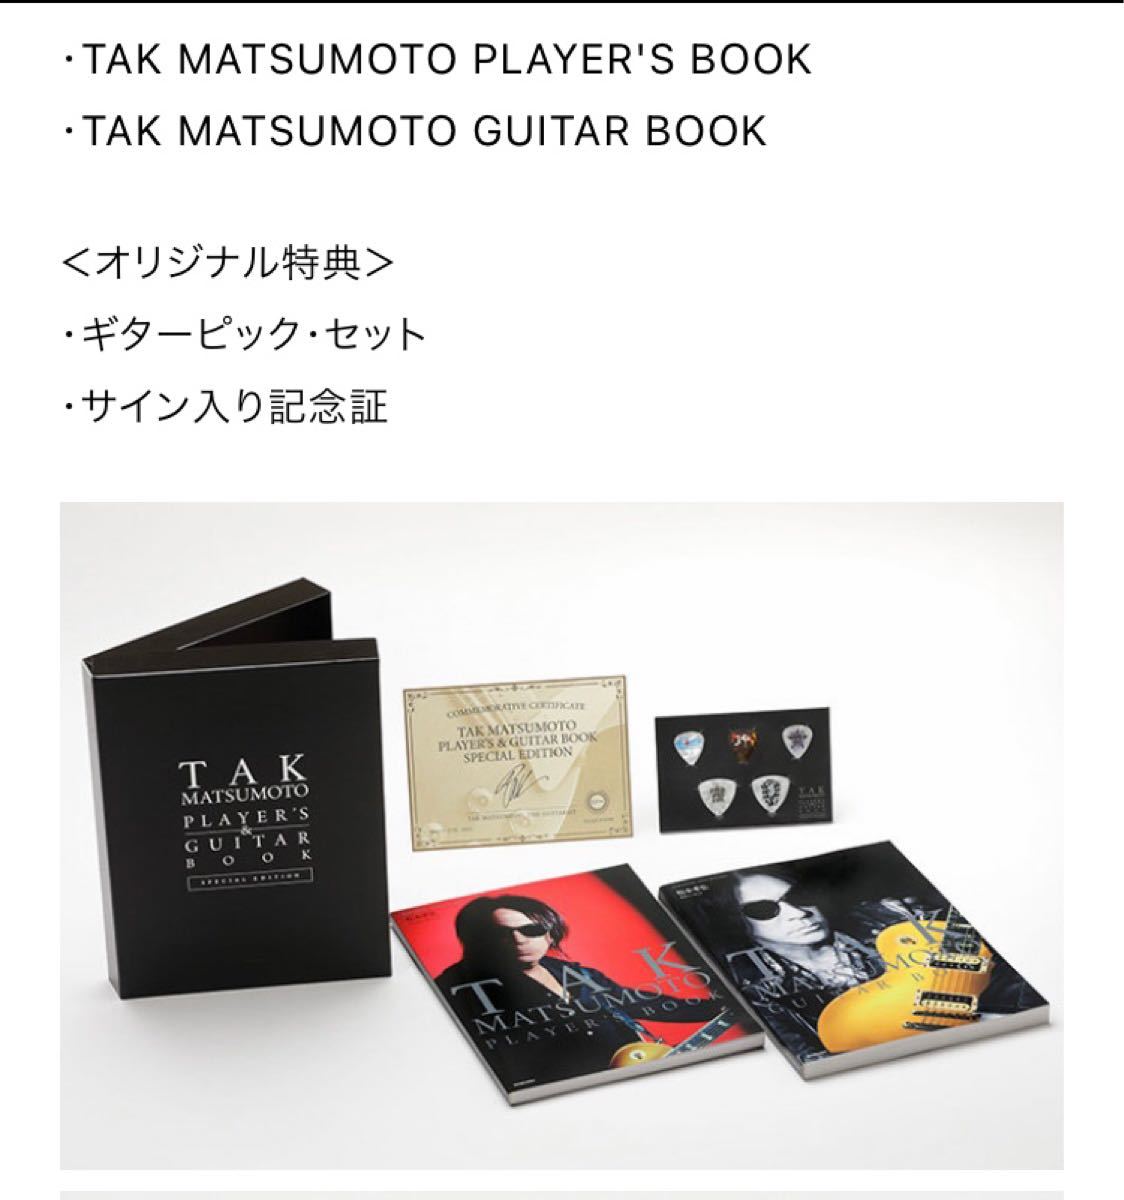 TAK MATSUMOTO PLAYER'S & GUITAR BOOK SPECIAL EDITION